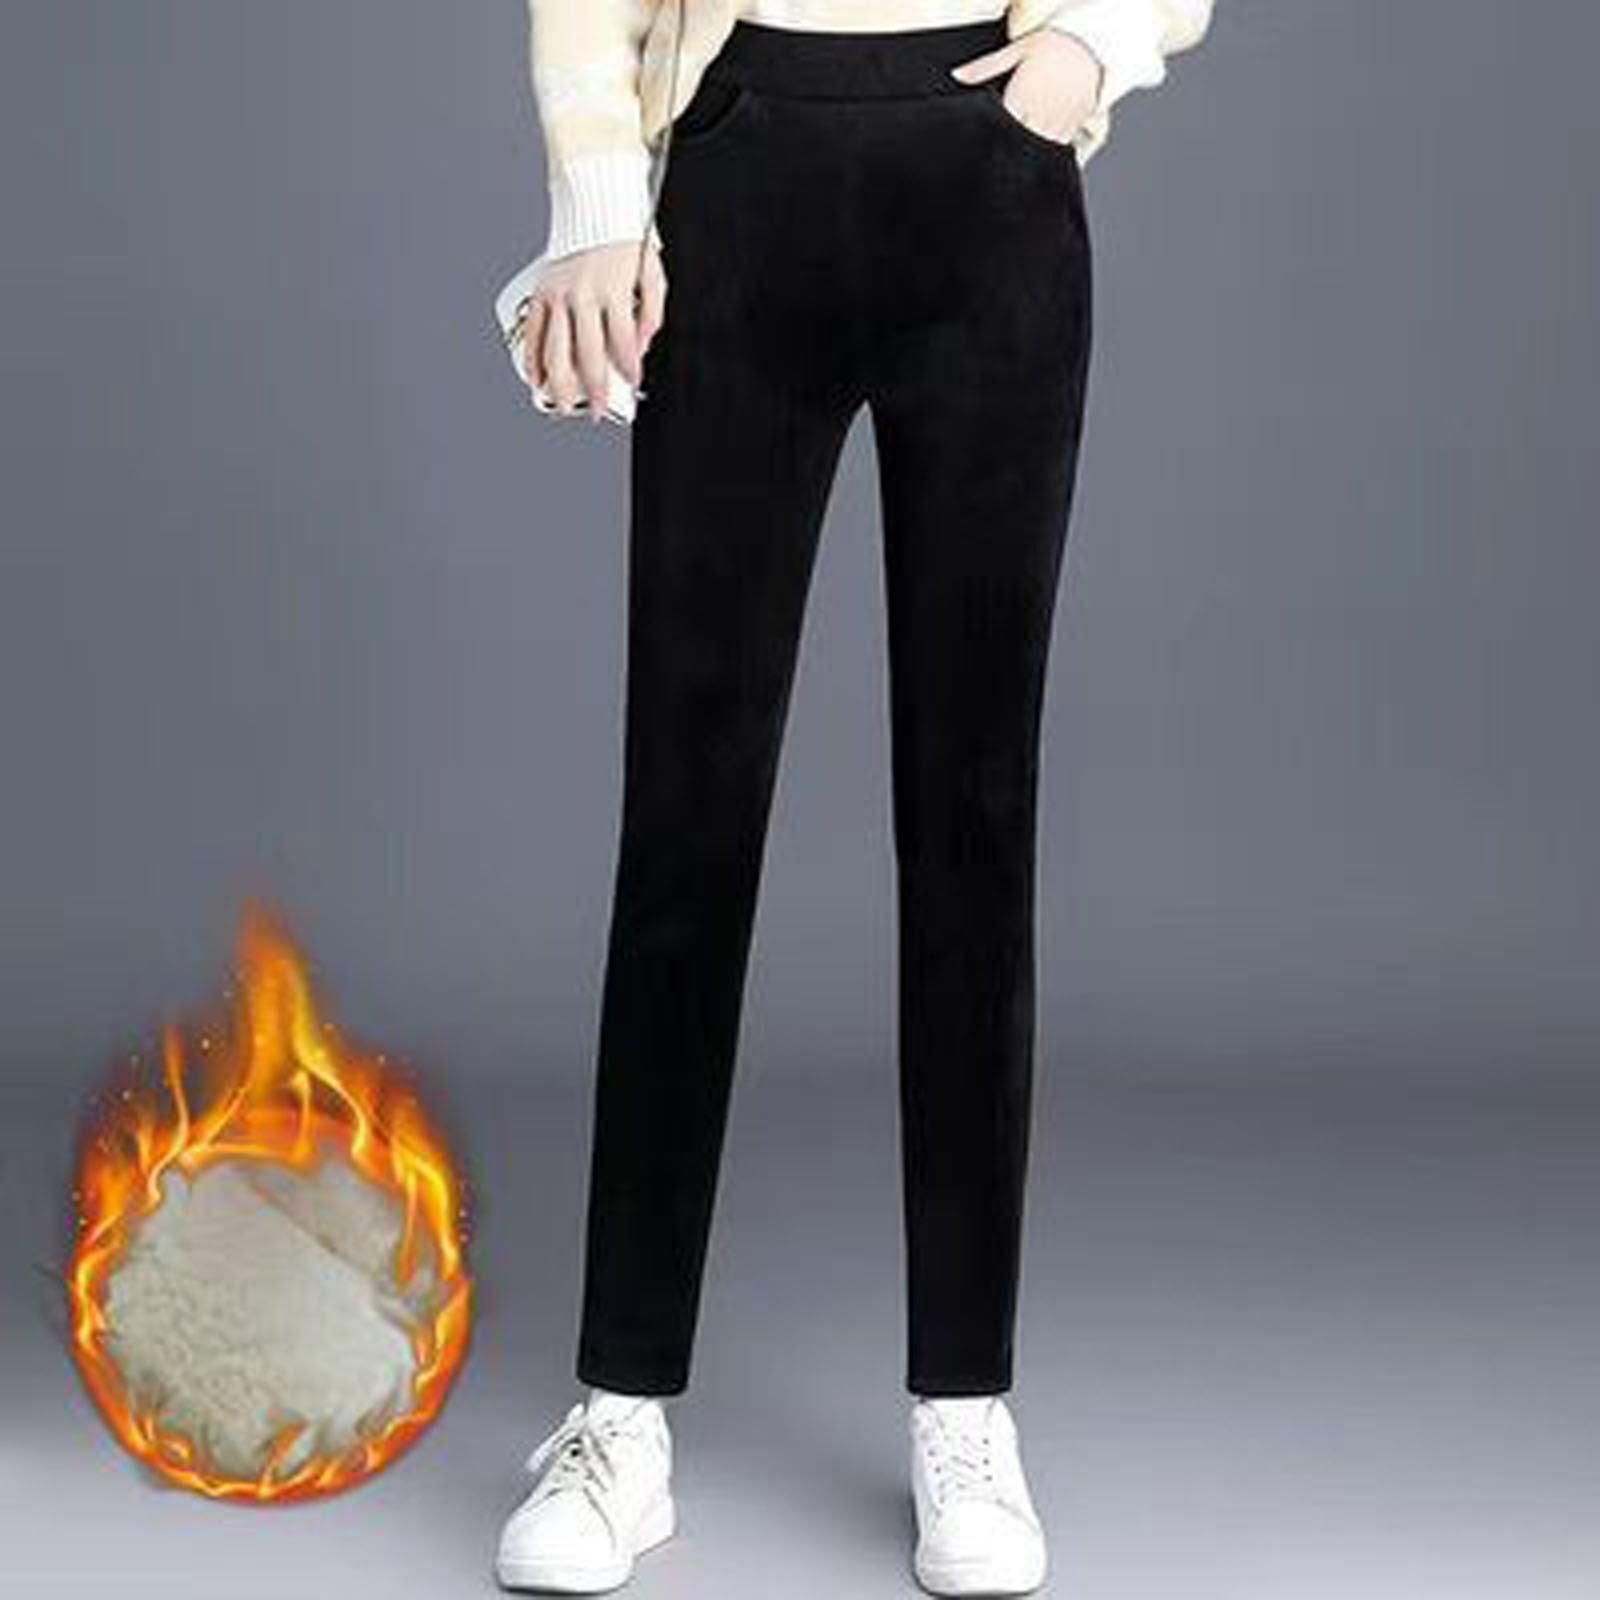 Elegant Solid Skinny Black Plus Size Pants (Women's) 